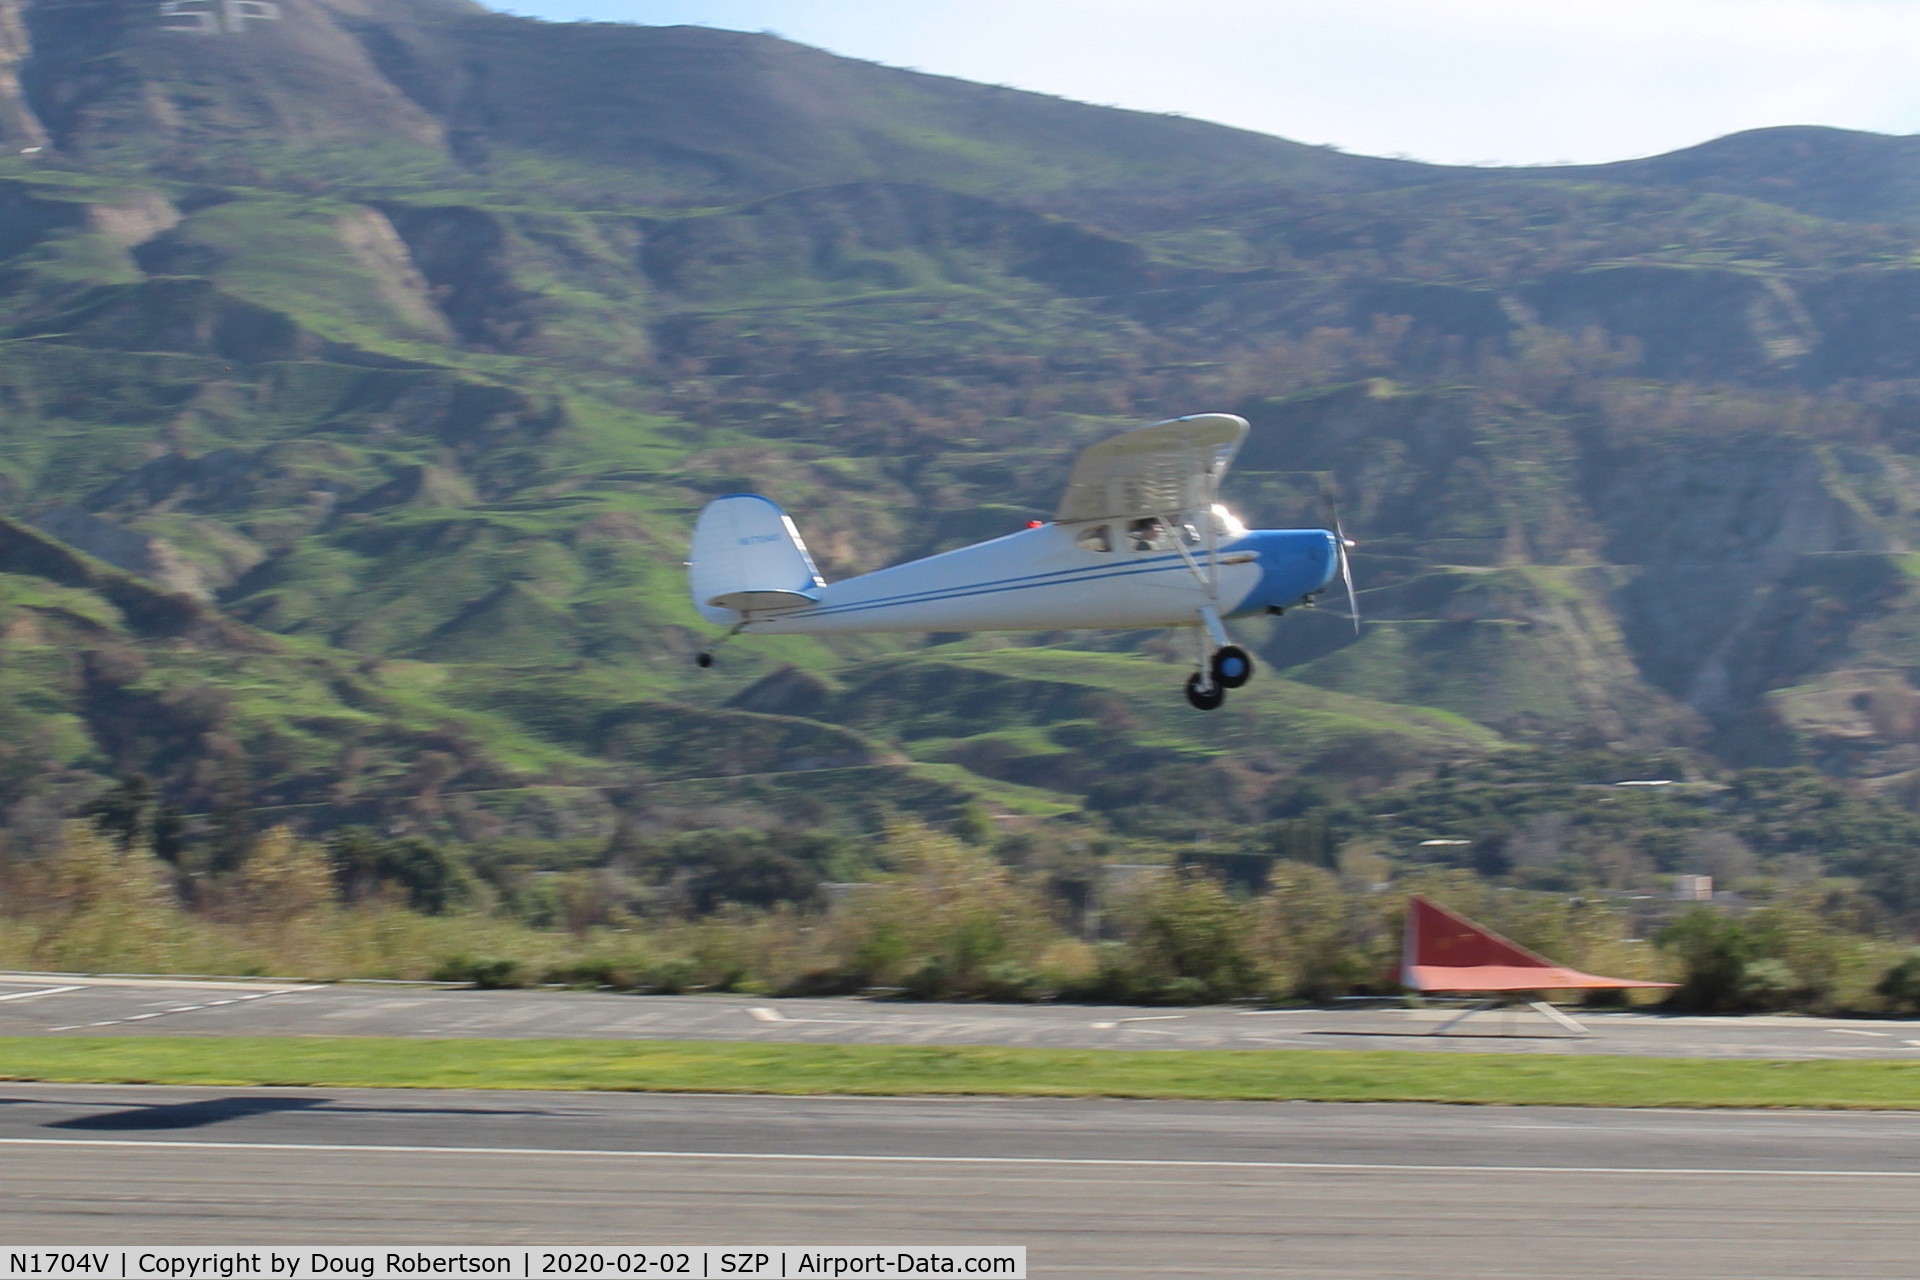 N1704V, Cessna 140 C/N 13889, 1948 Cessna 140, Continental C-85-12 85 Hp, another takeoff climb Rwy 22